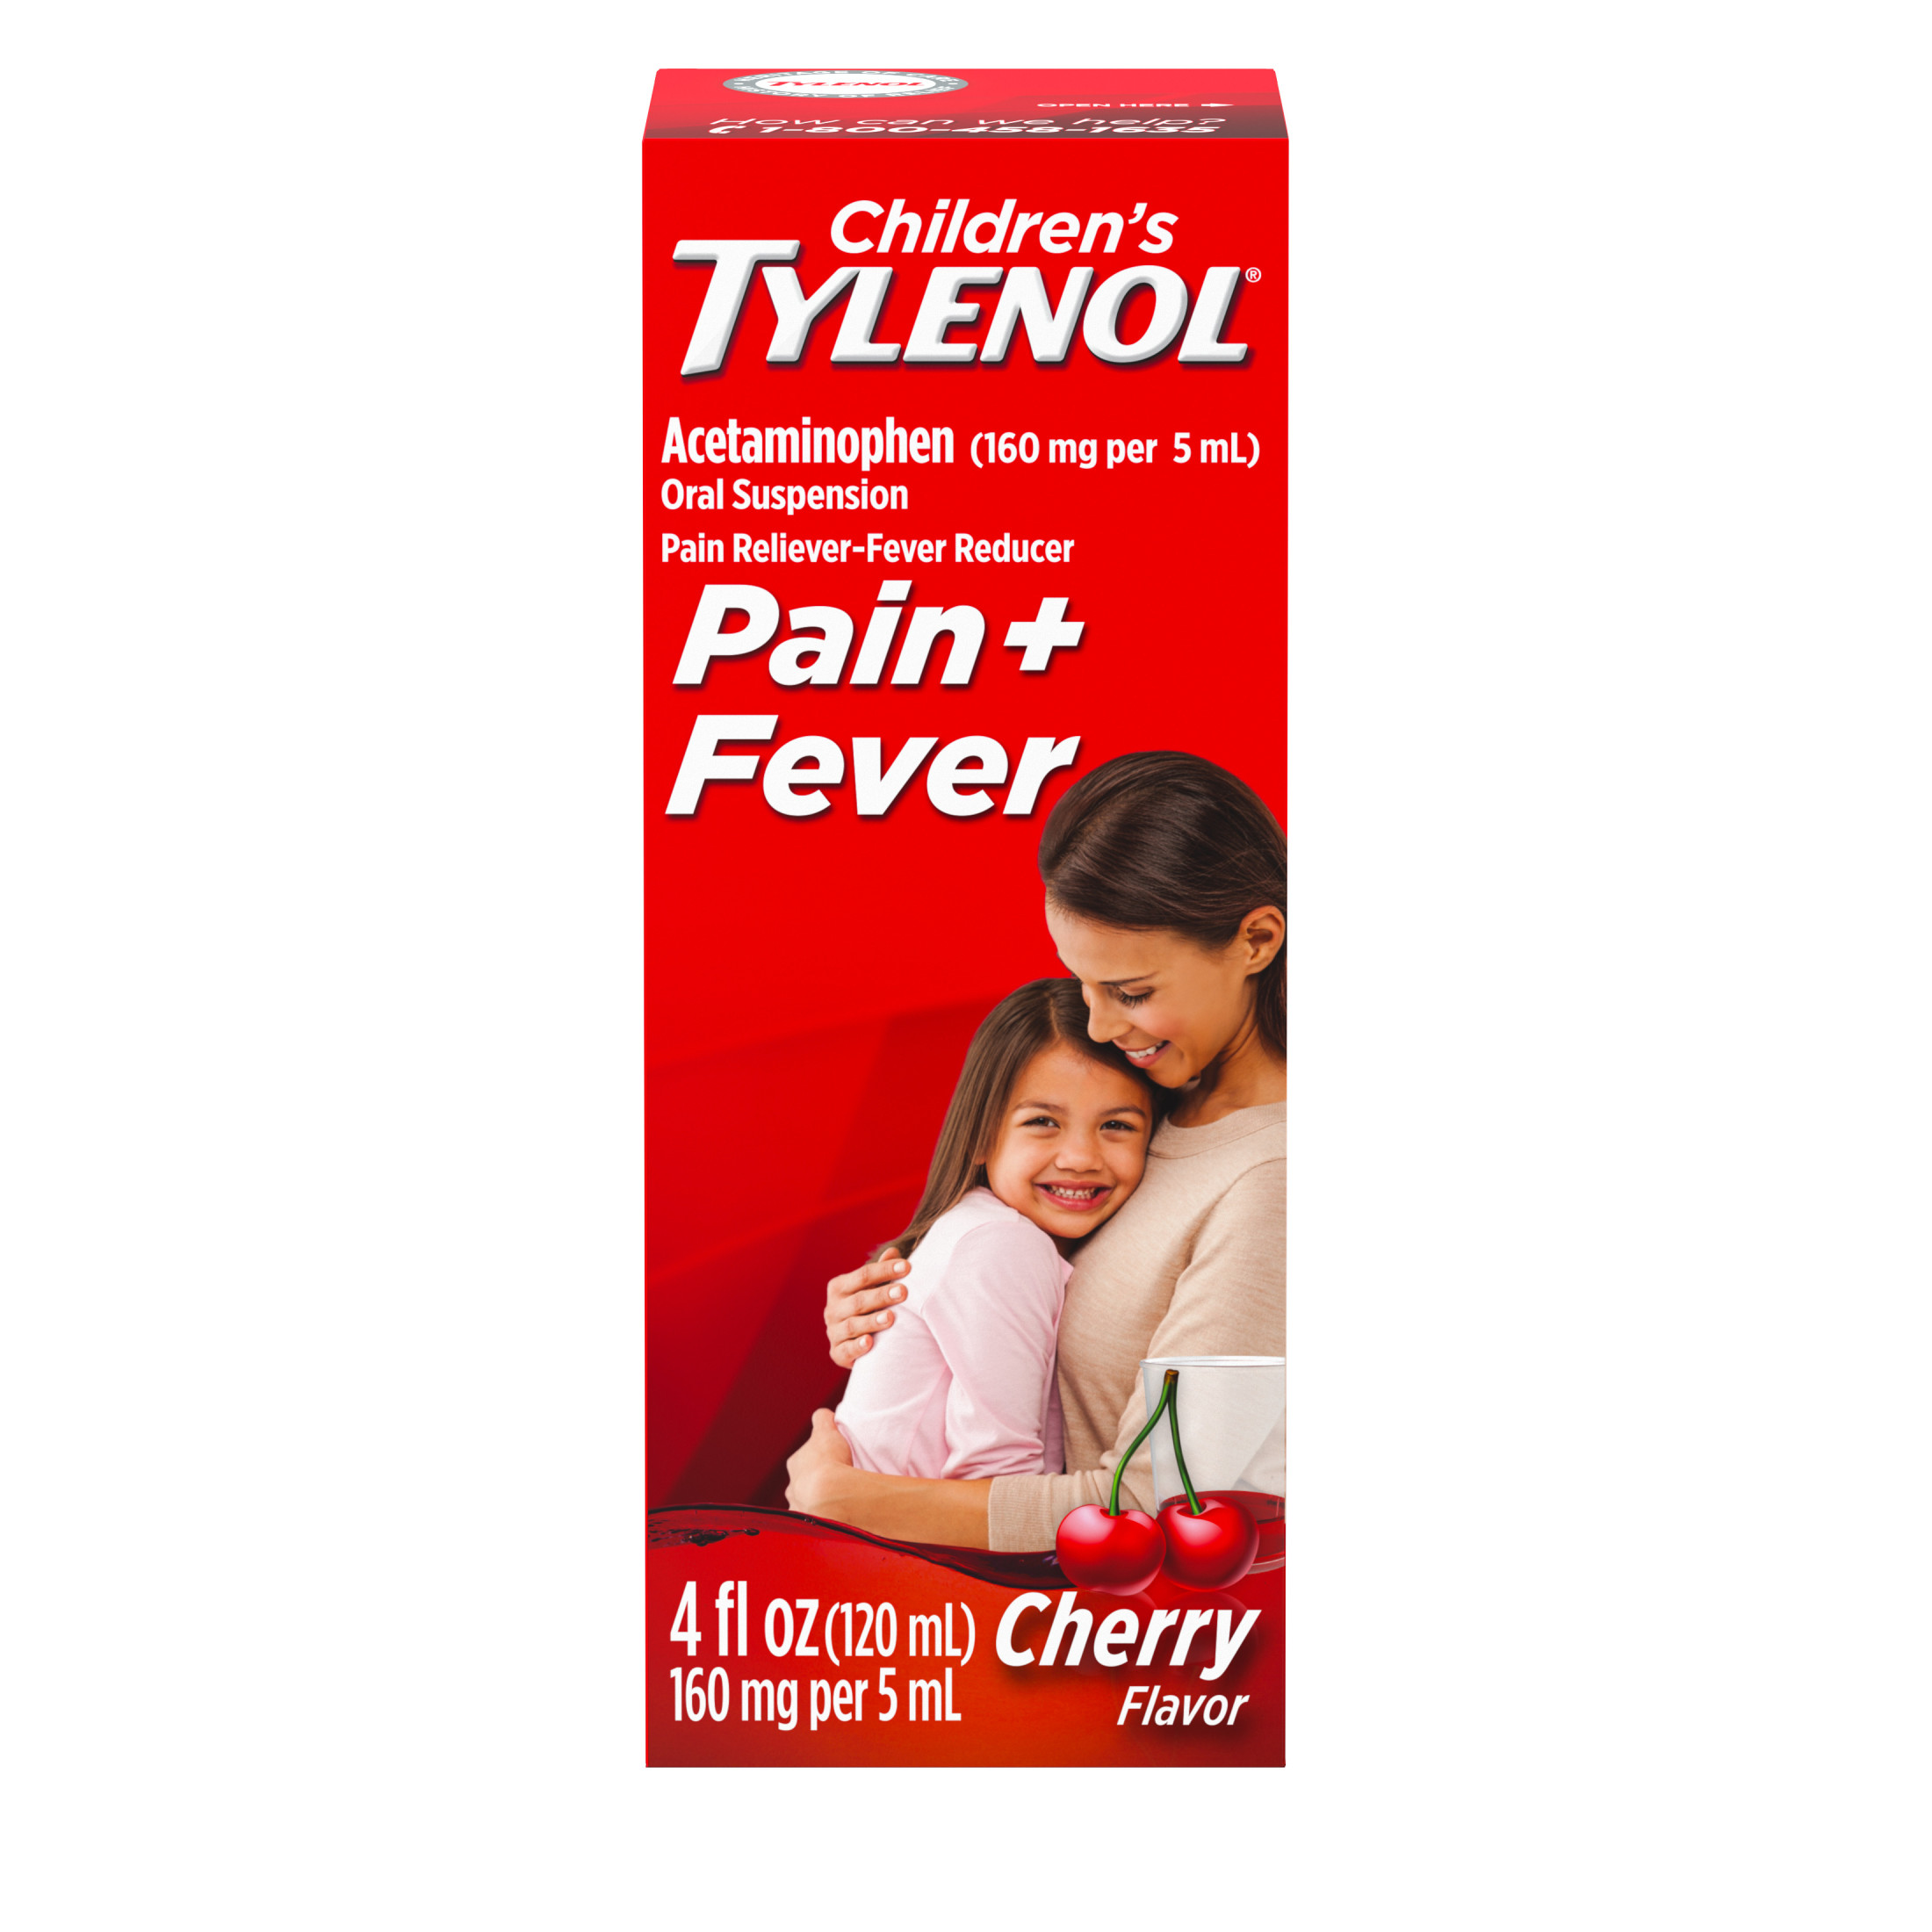 Children's Tylenol Pain + Fever Relief Medicine, Cherry, 4 fl. oz - image 1 of 9